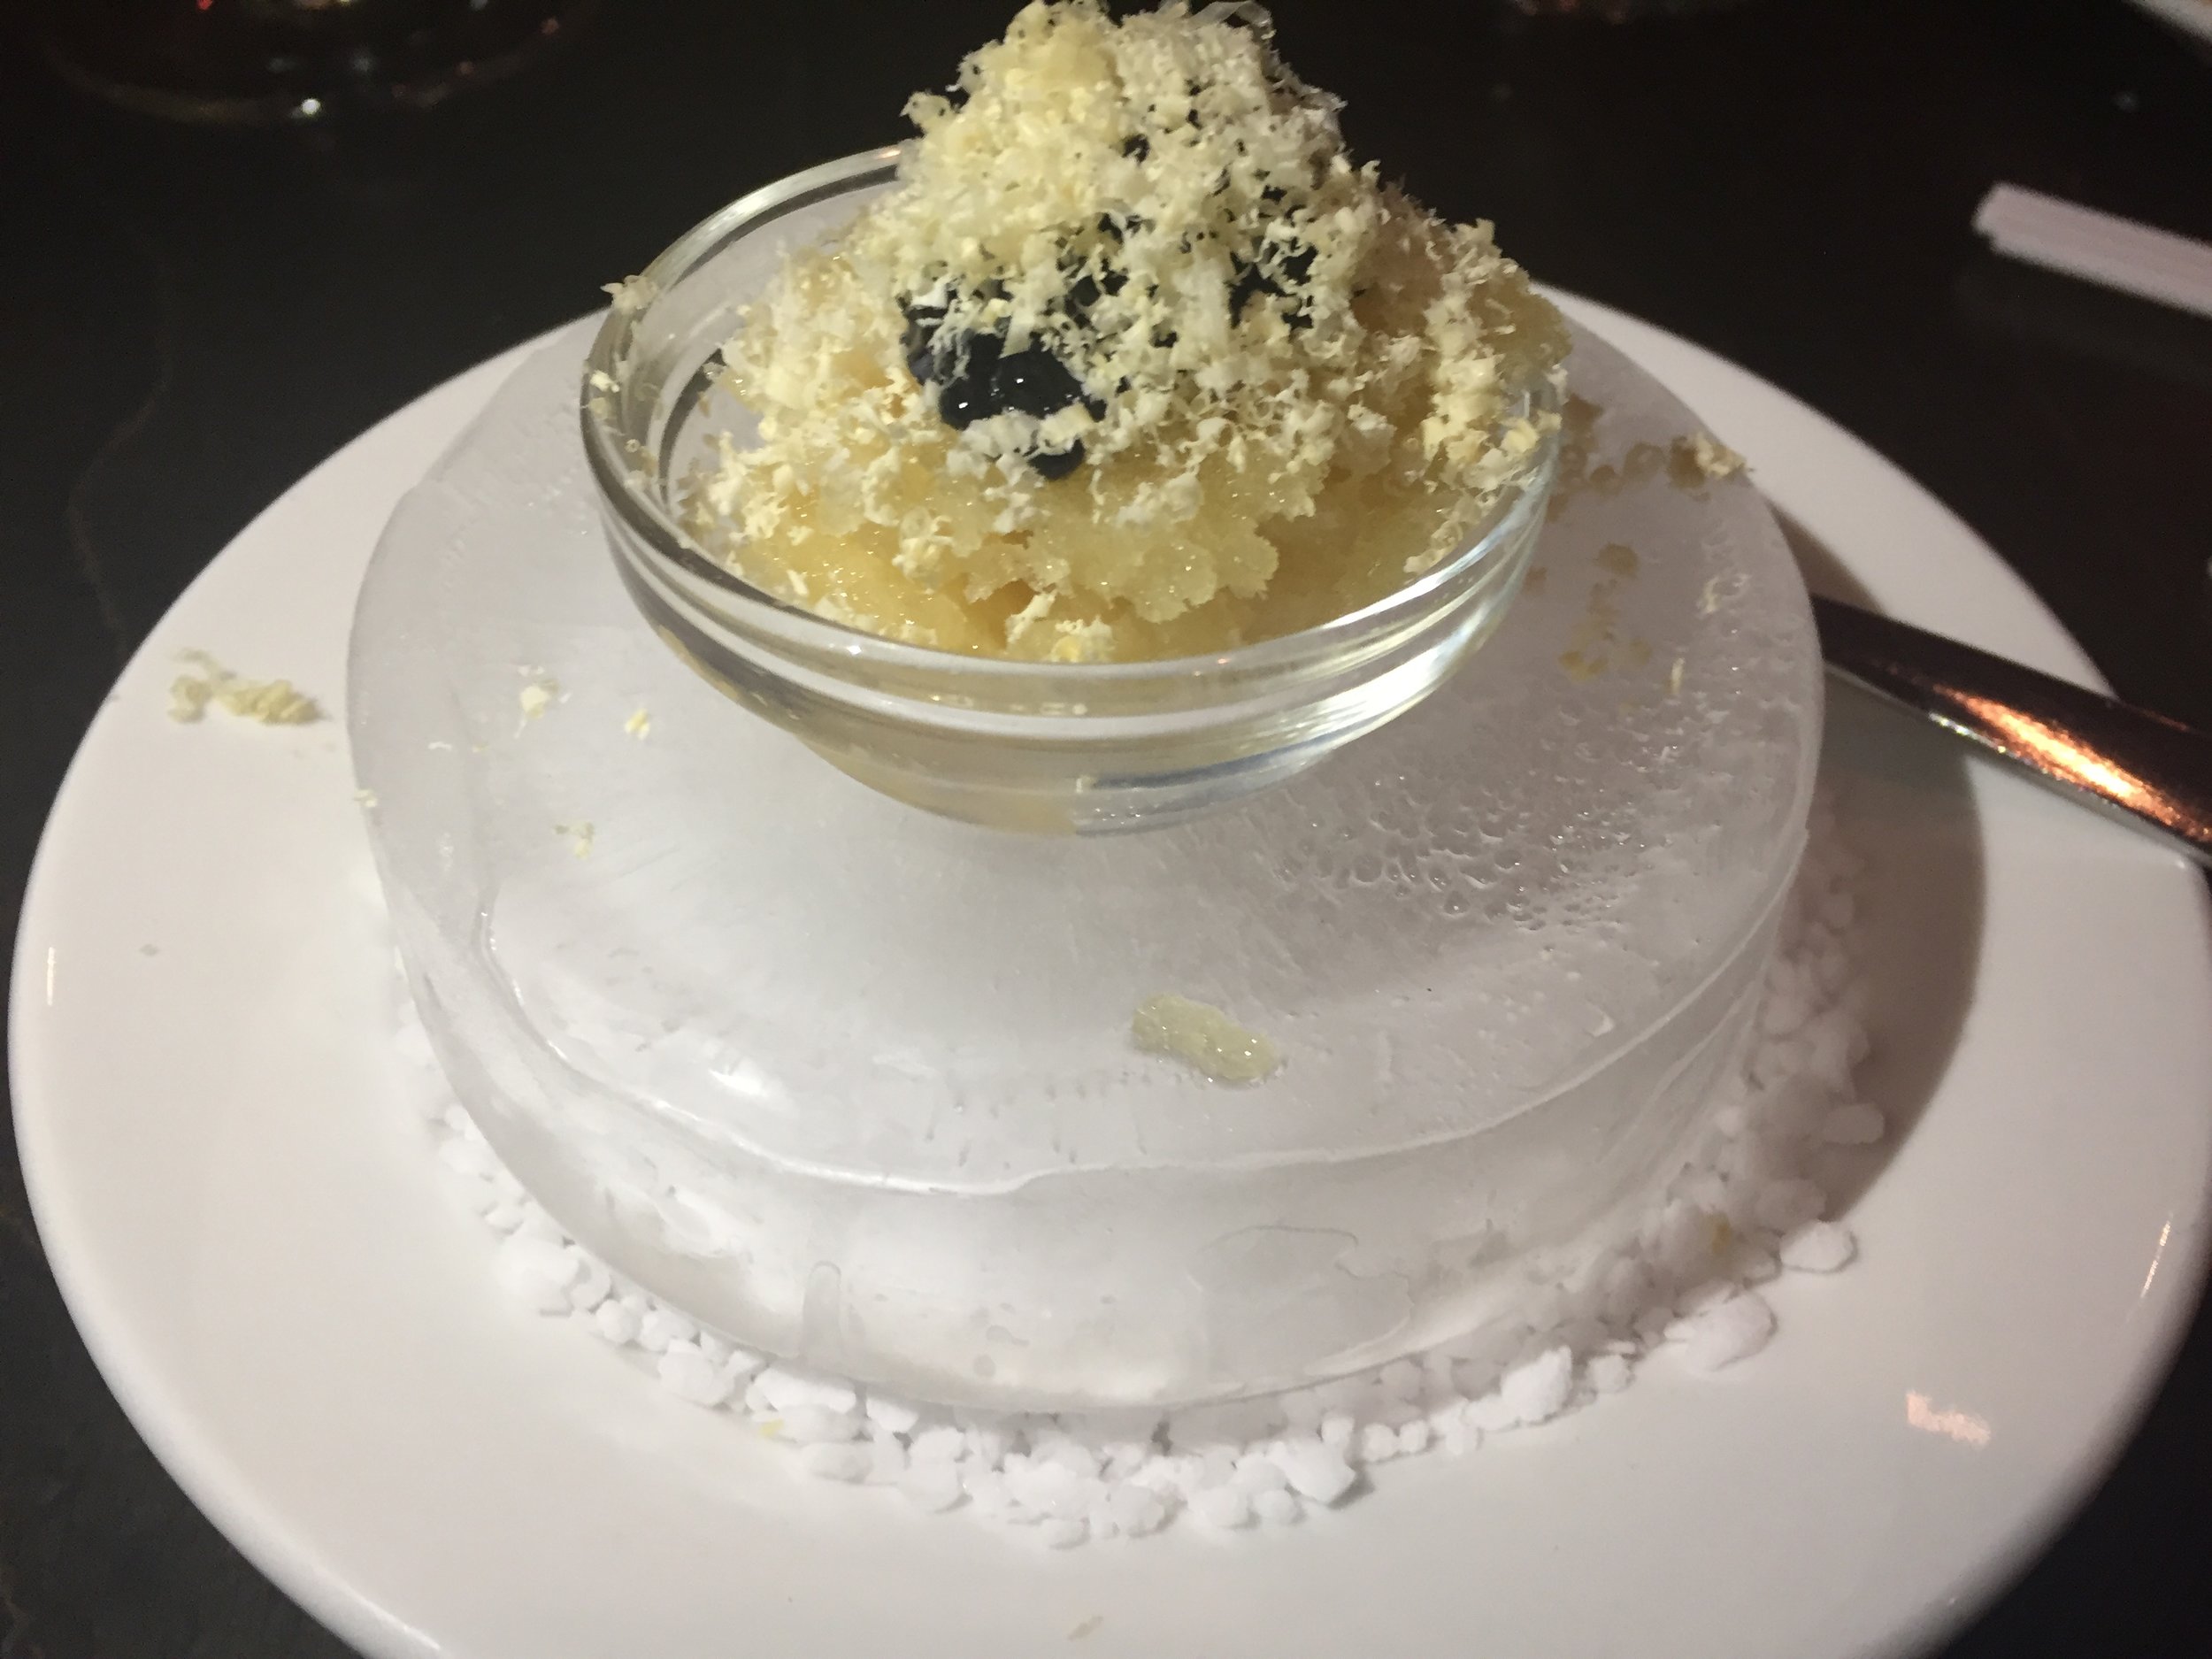  Maple syrup granite, Mujol (Spanish herring) caviar served with foie gras snow 